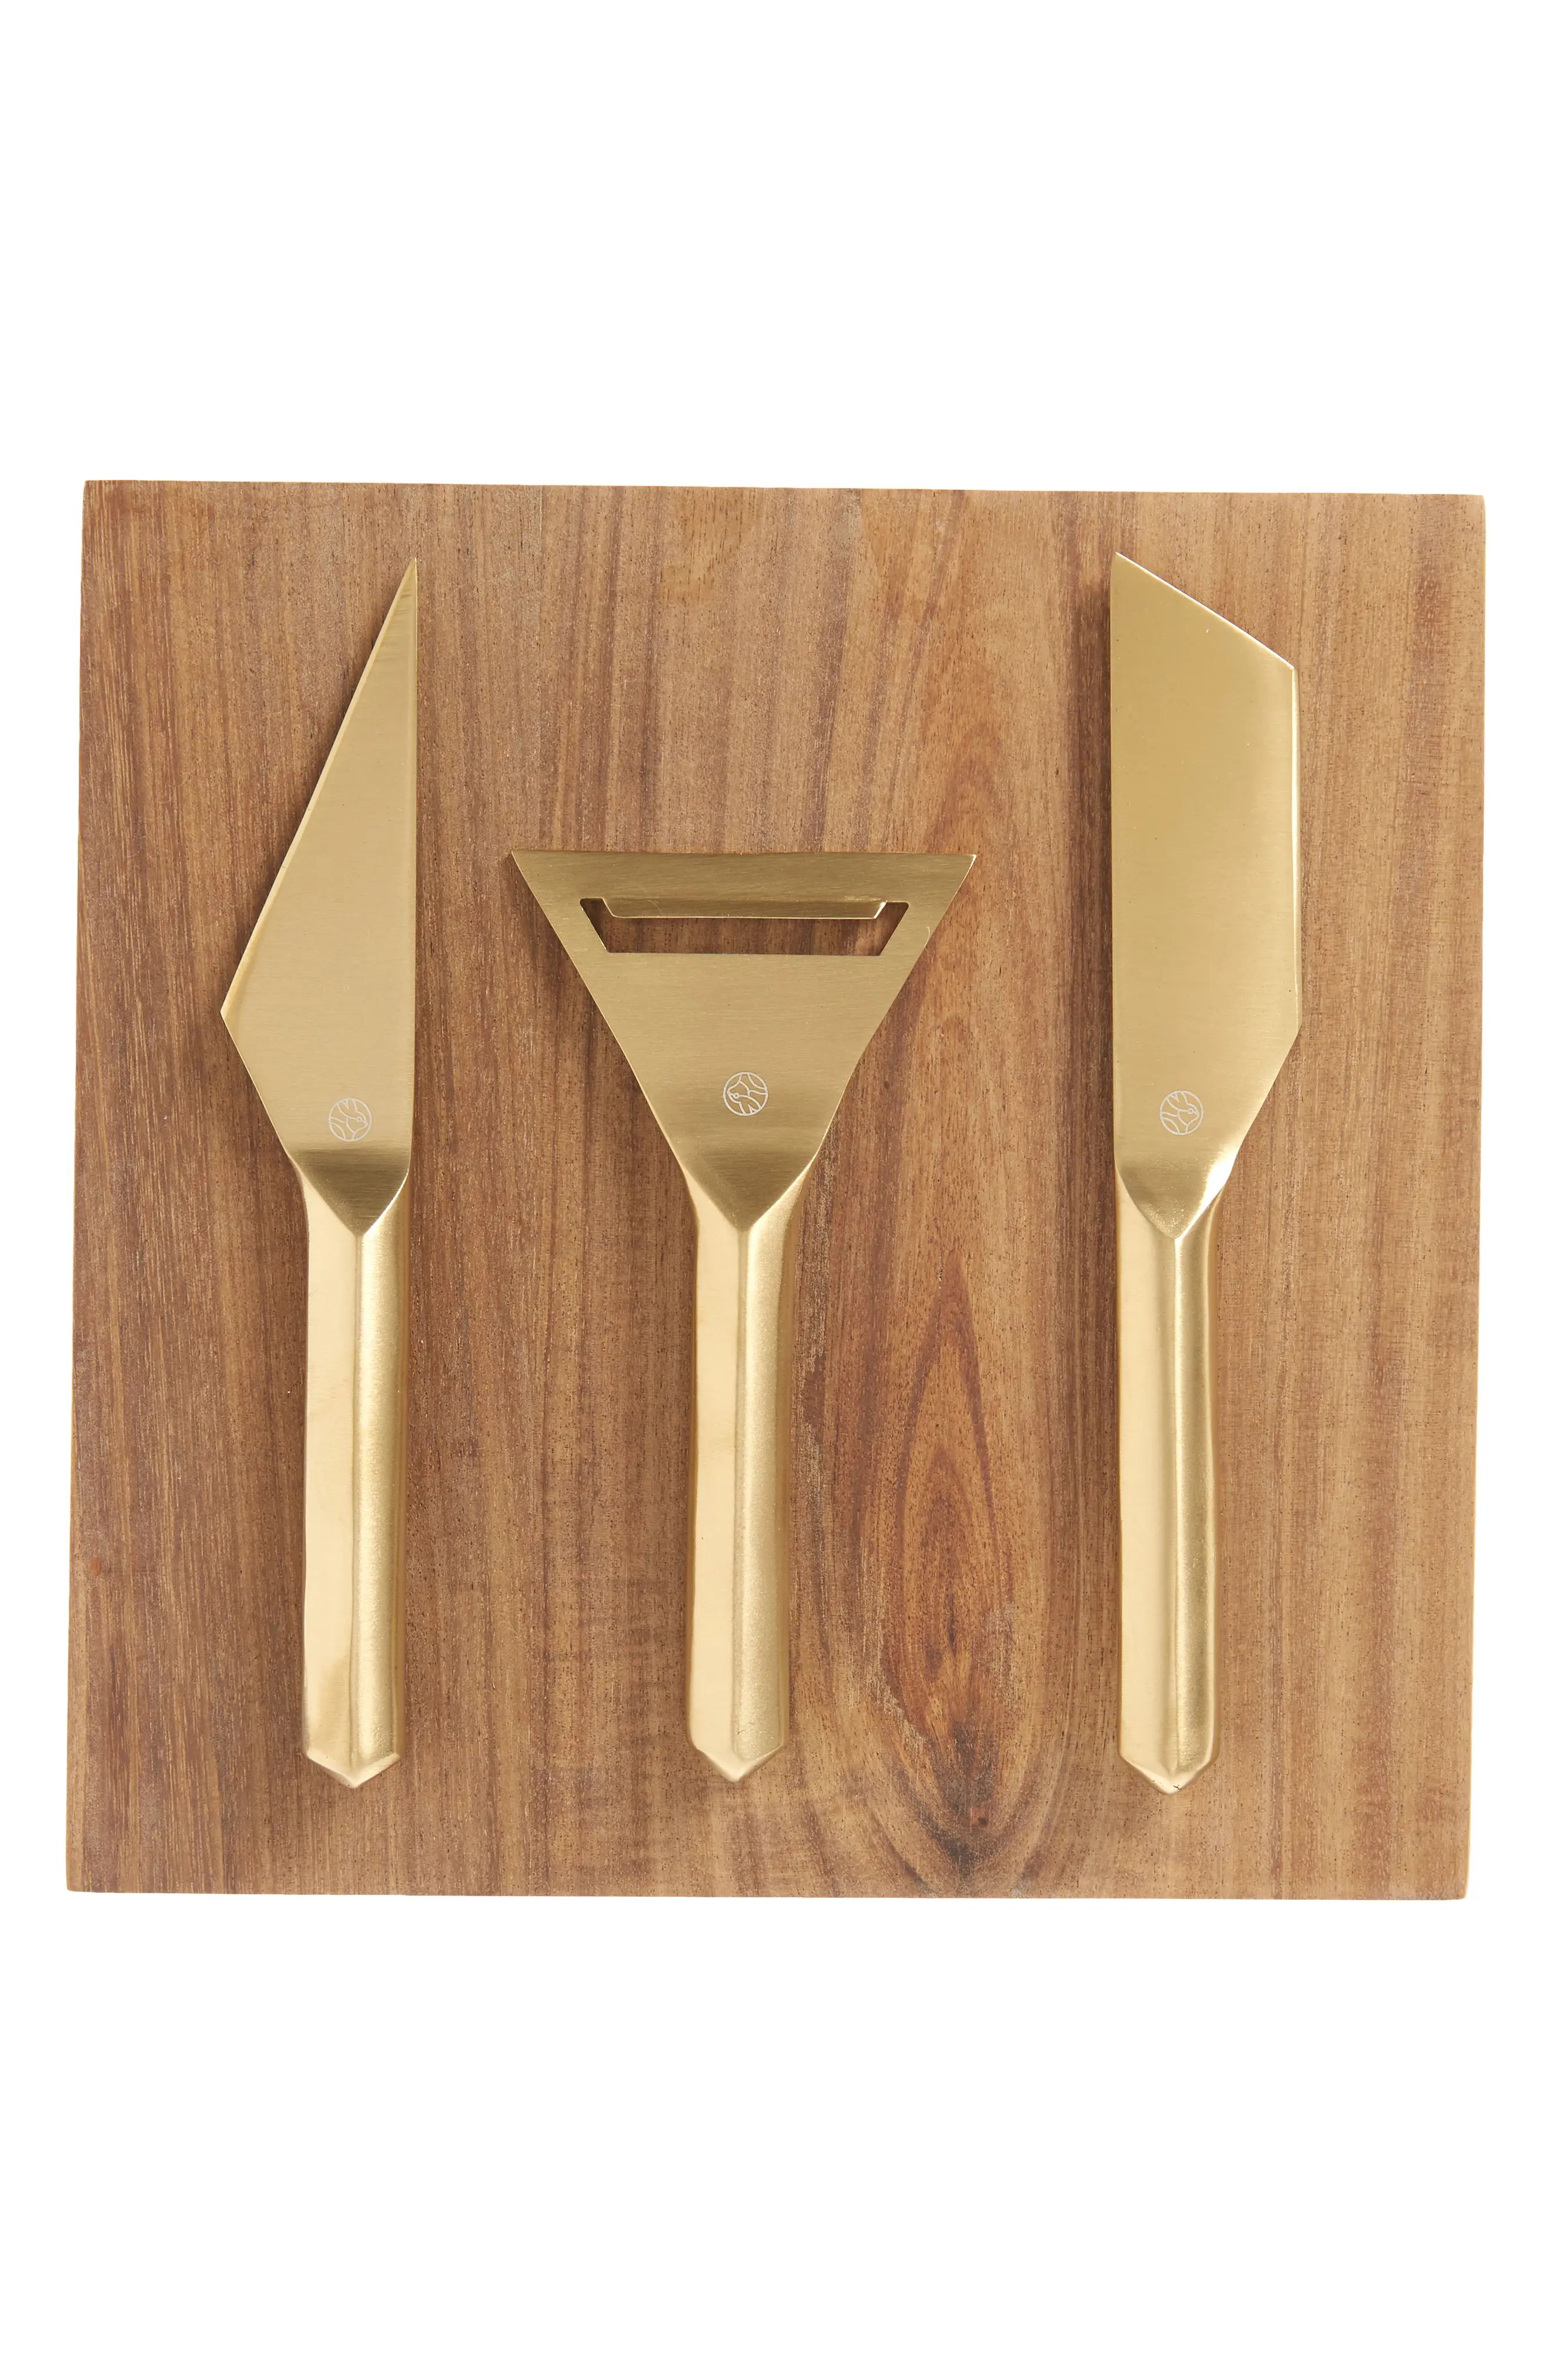 Rabbit Cheese Knives, Slicer & Board Set | Nordstrom